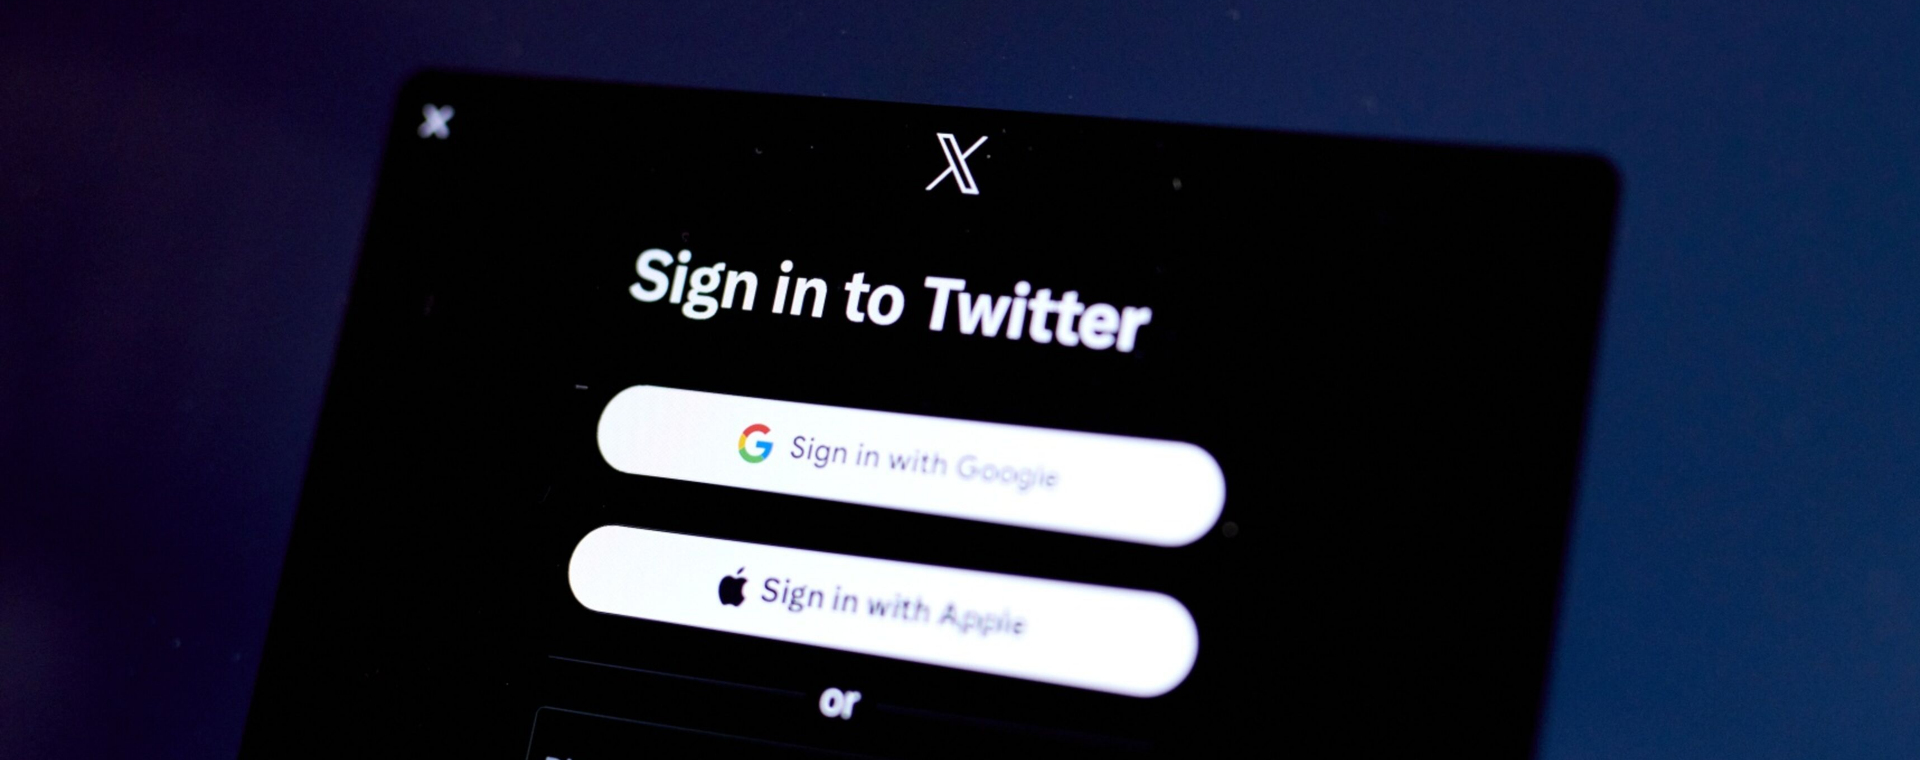  Twitter (X) Mulai Berbayar, Pengguna Baru Jadi Paling Terdampak